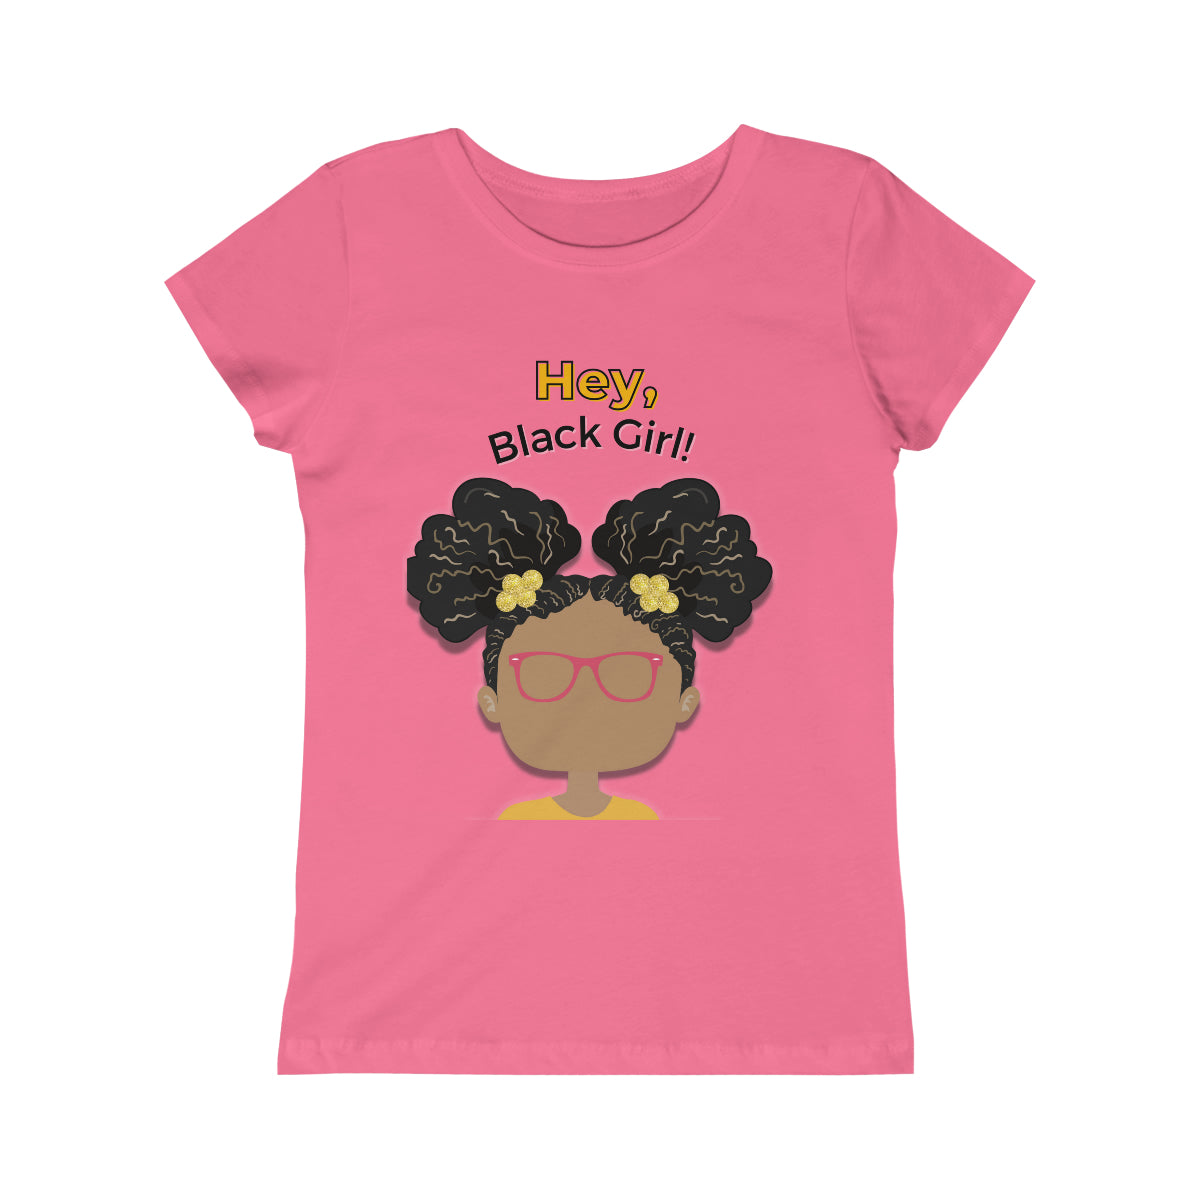 Hey, Black Girl! Princess Tee